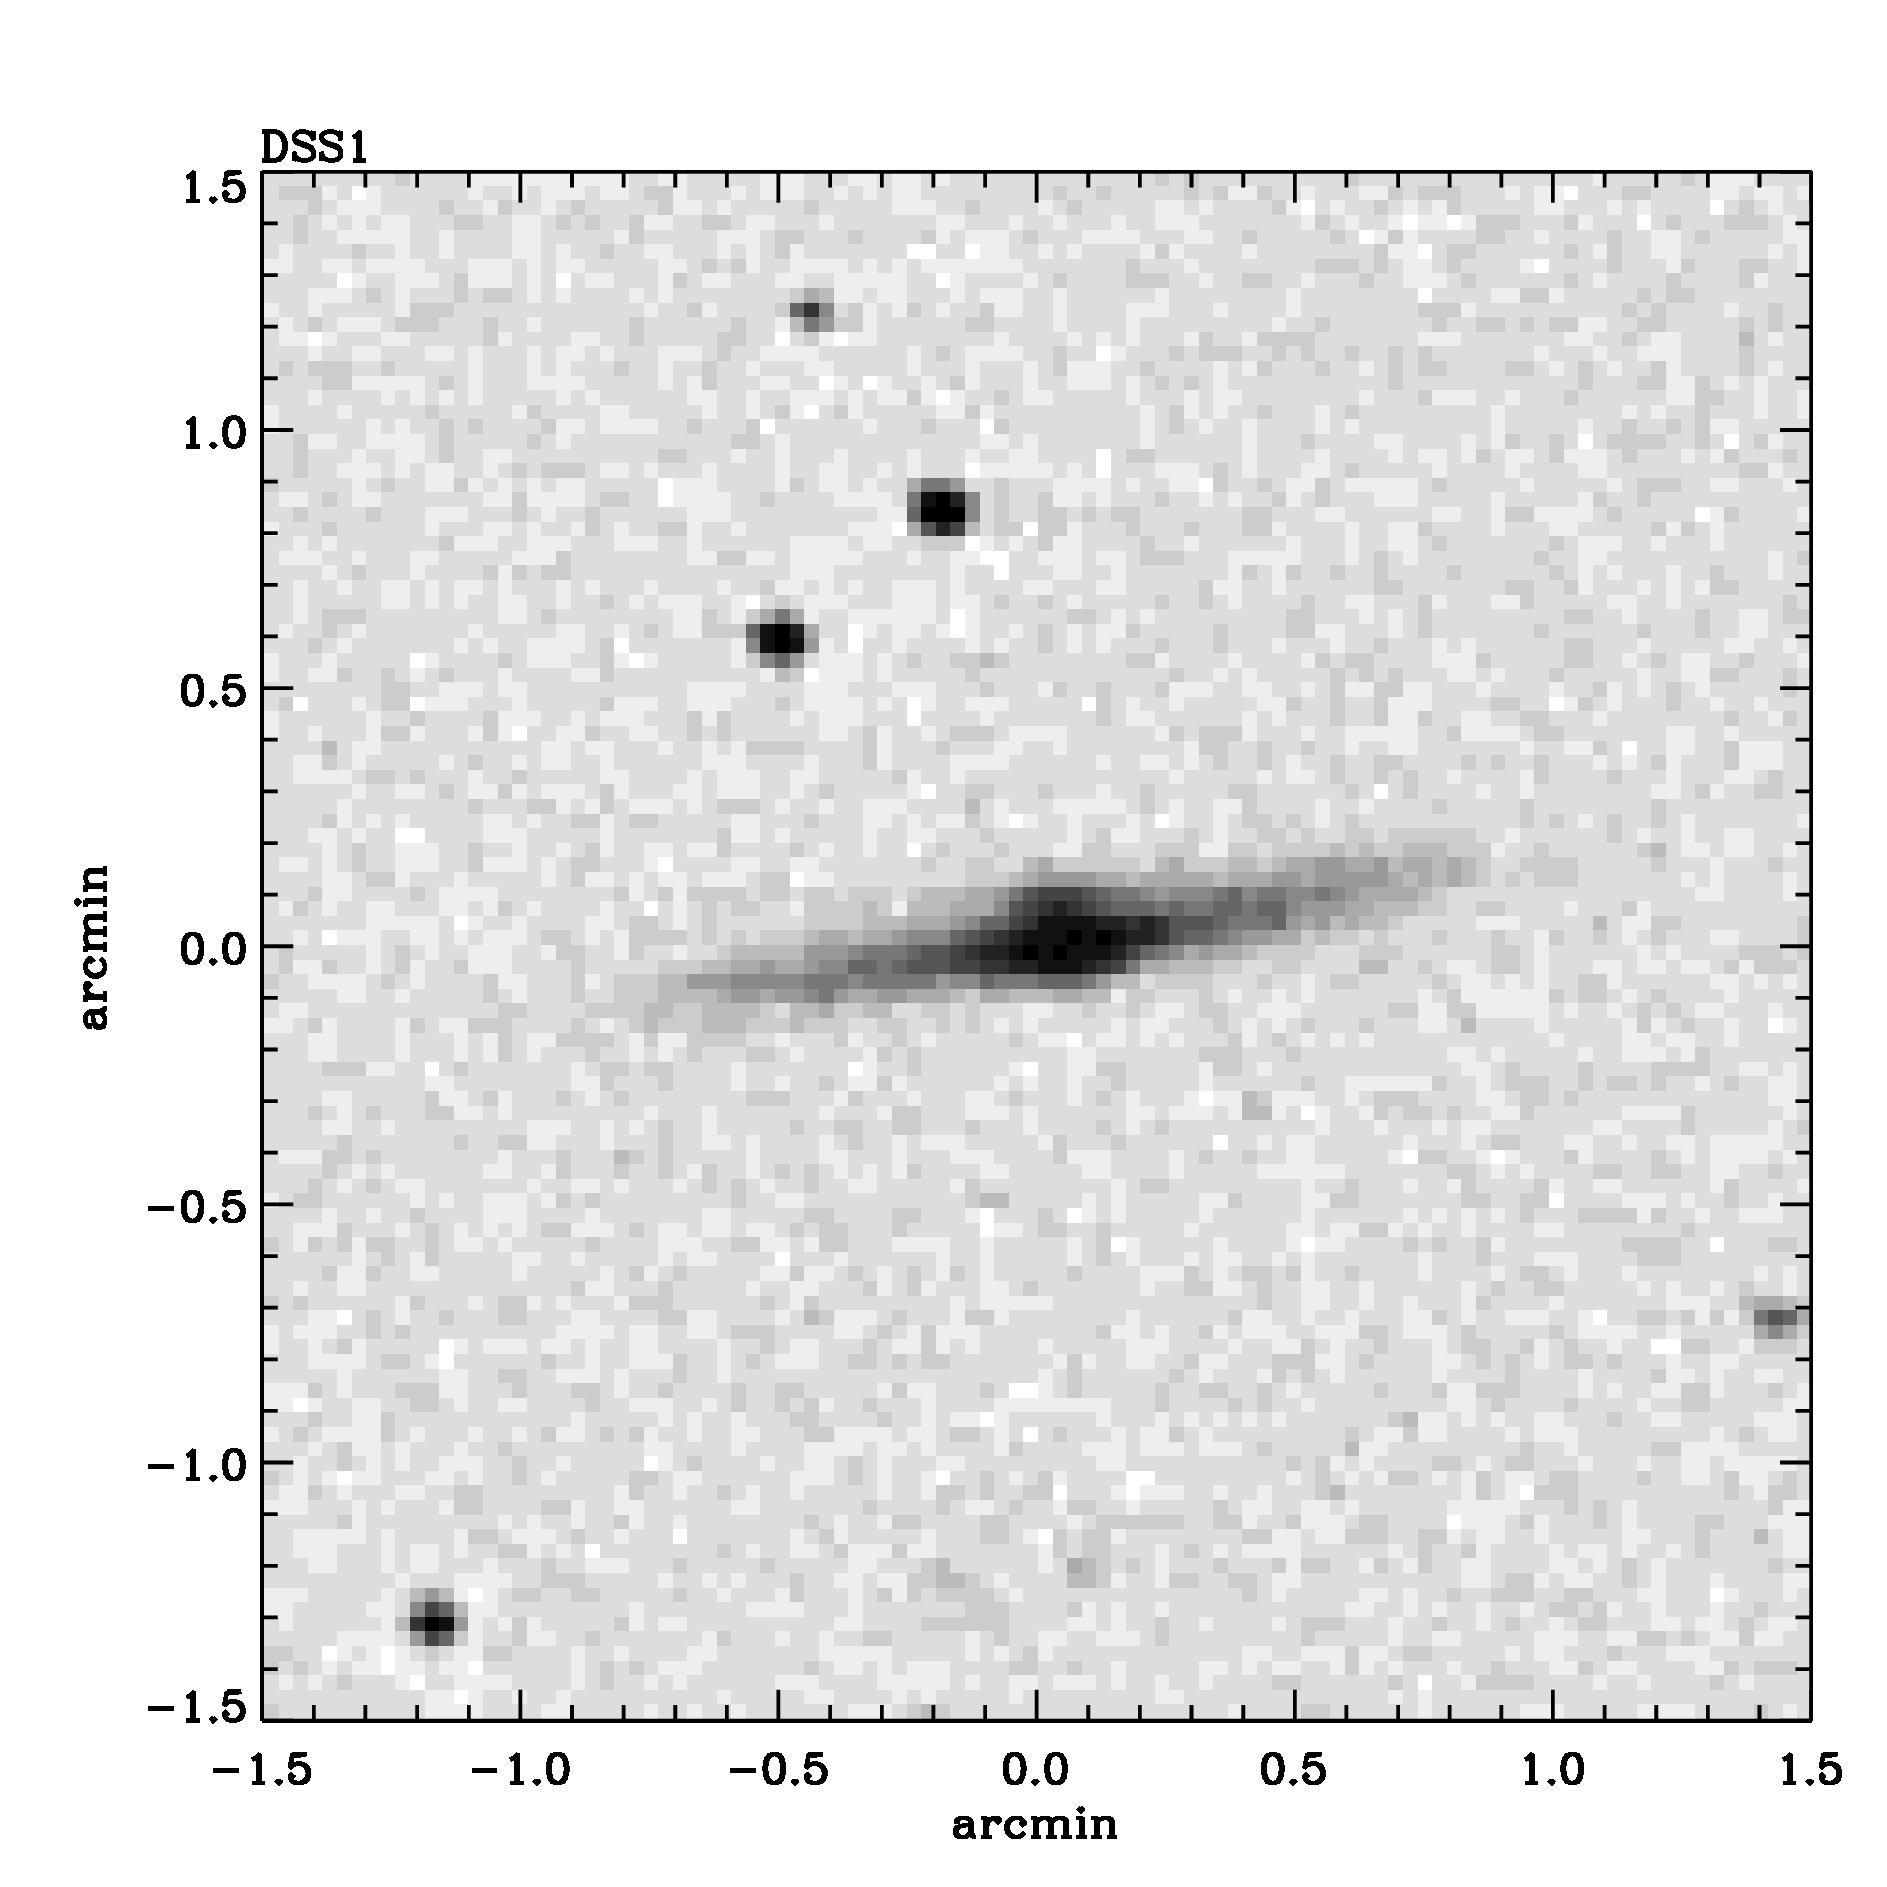 Optical image for SWIFT J0252.7-0822